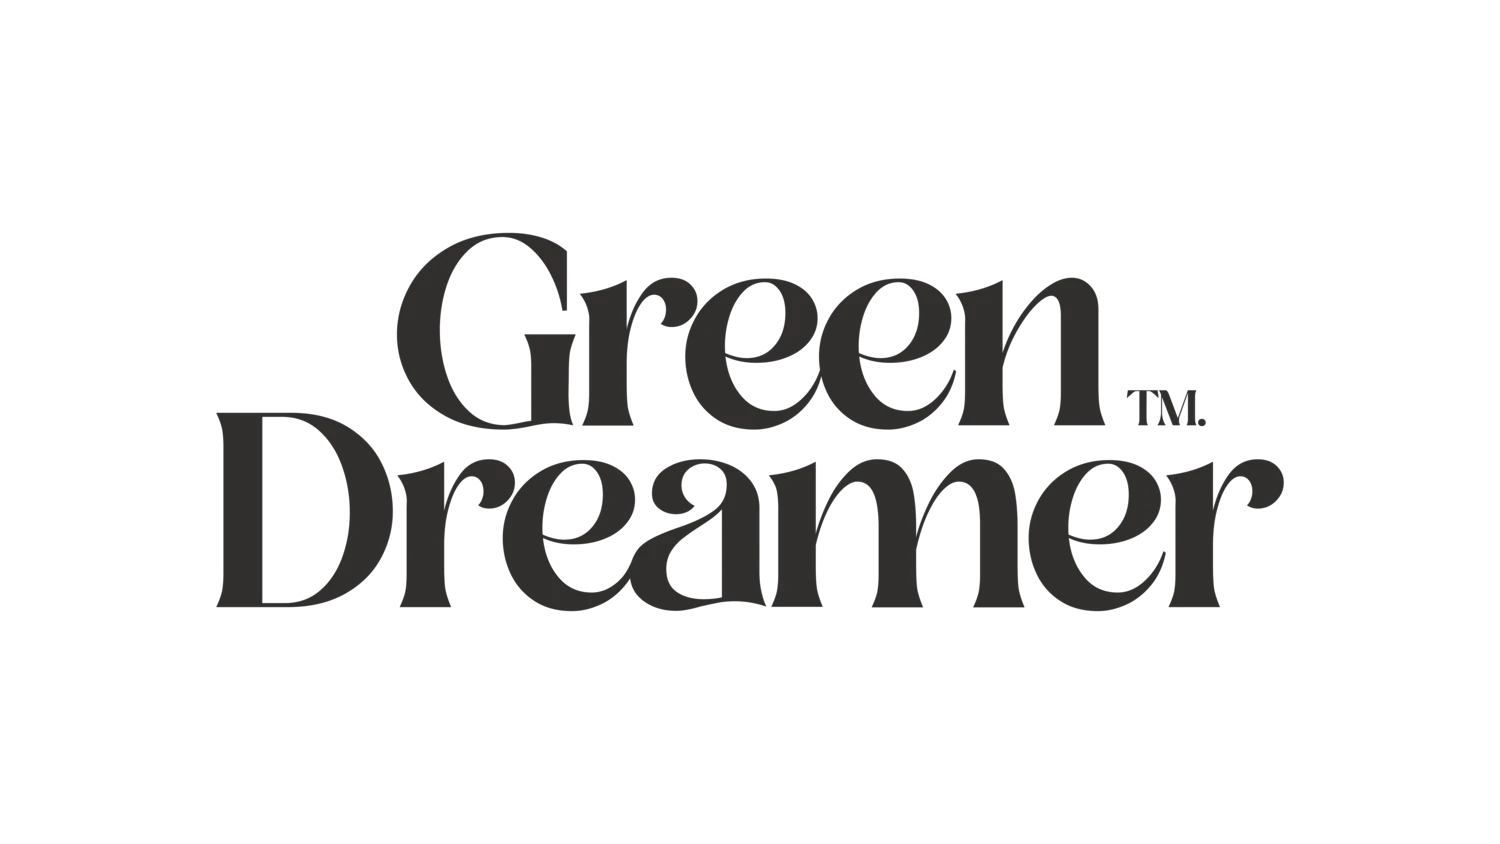 greendreamer.com